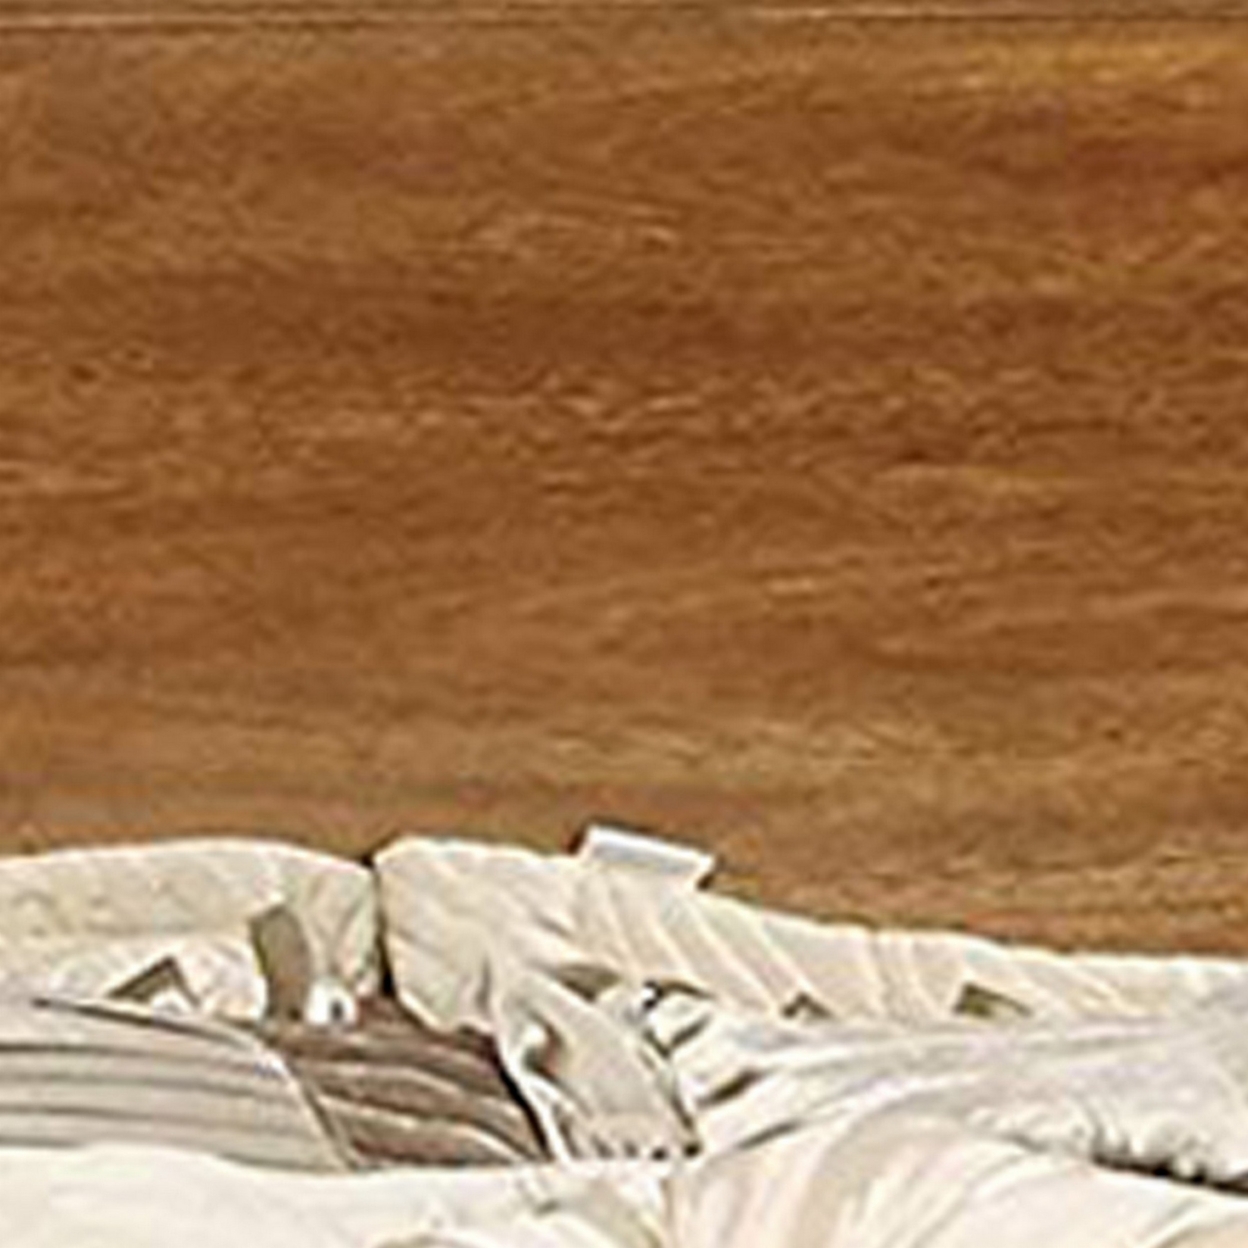 Wooden California King Size Bed With Panel Headboard, Oak Brown- Saltoro Sherpi